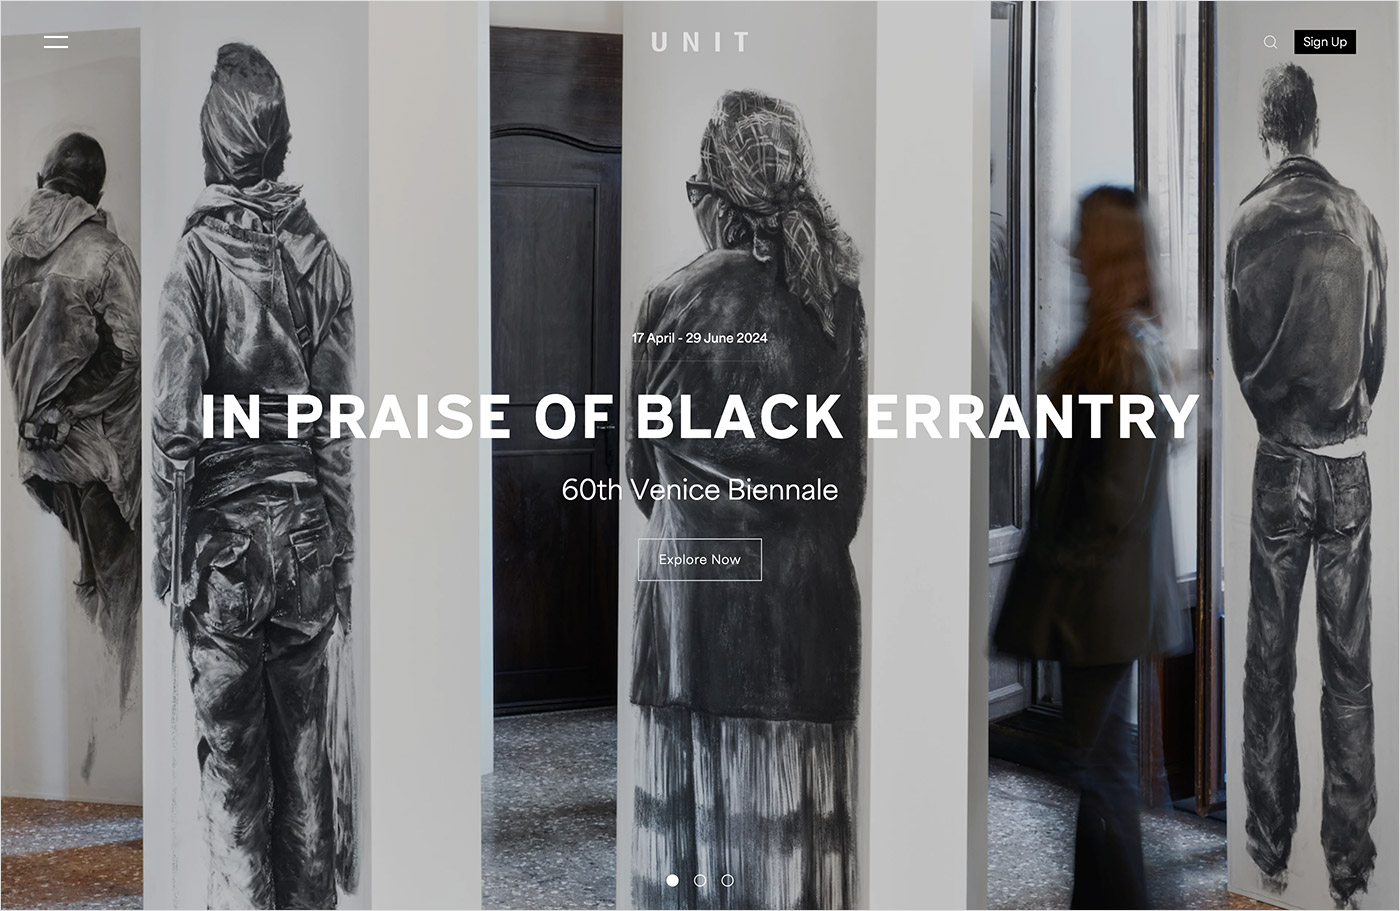 Unit | Contemporary Art Gallery in Mayfairウェブサイトの画面キャプチャ画像